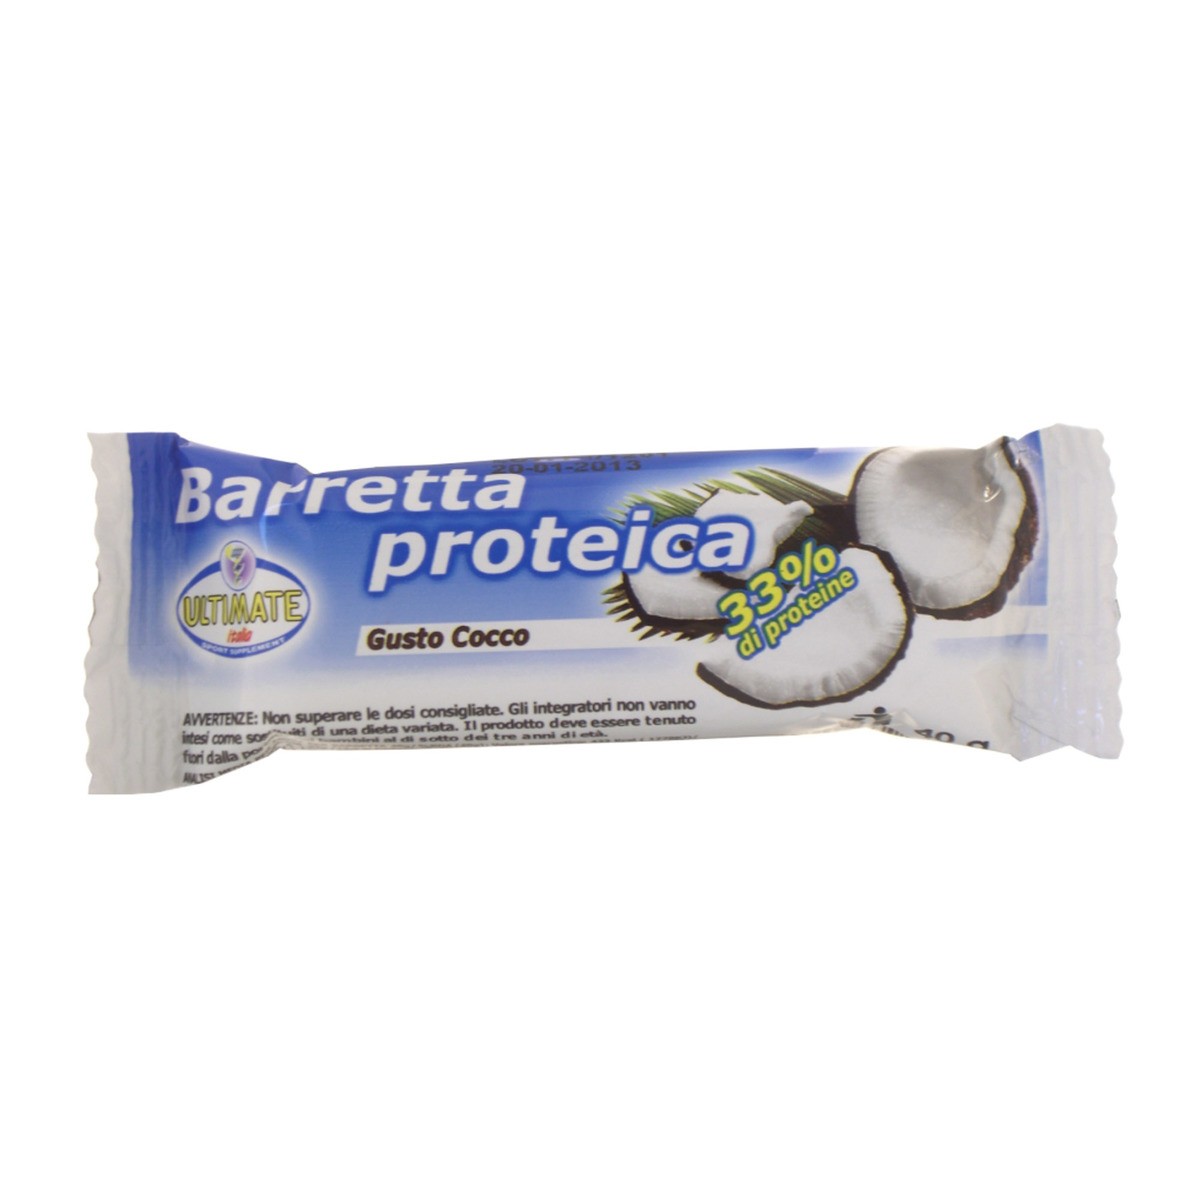 Barretta proteica